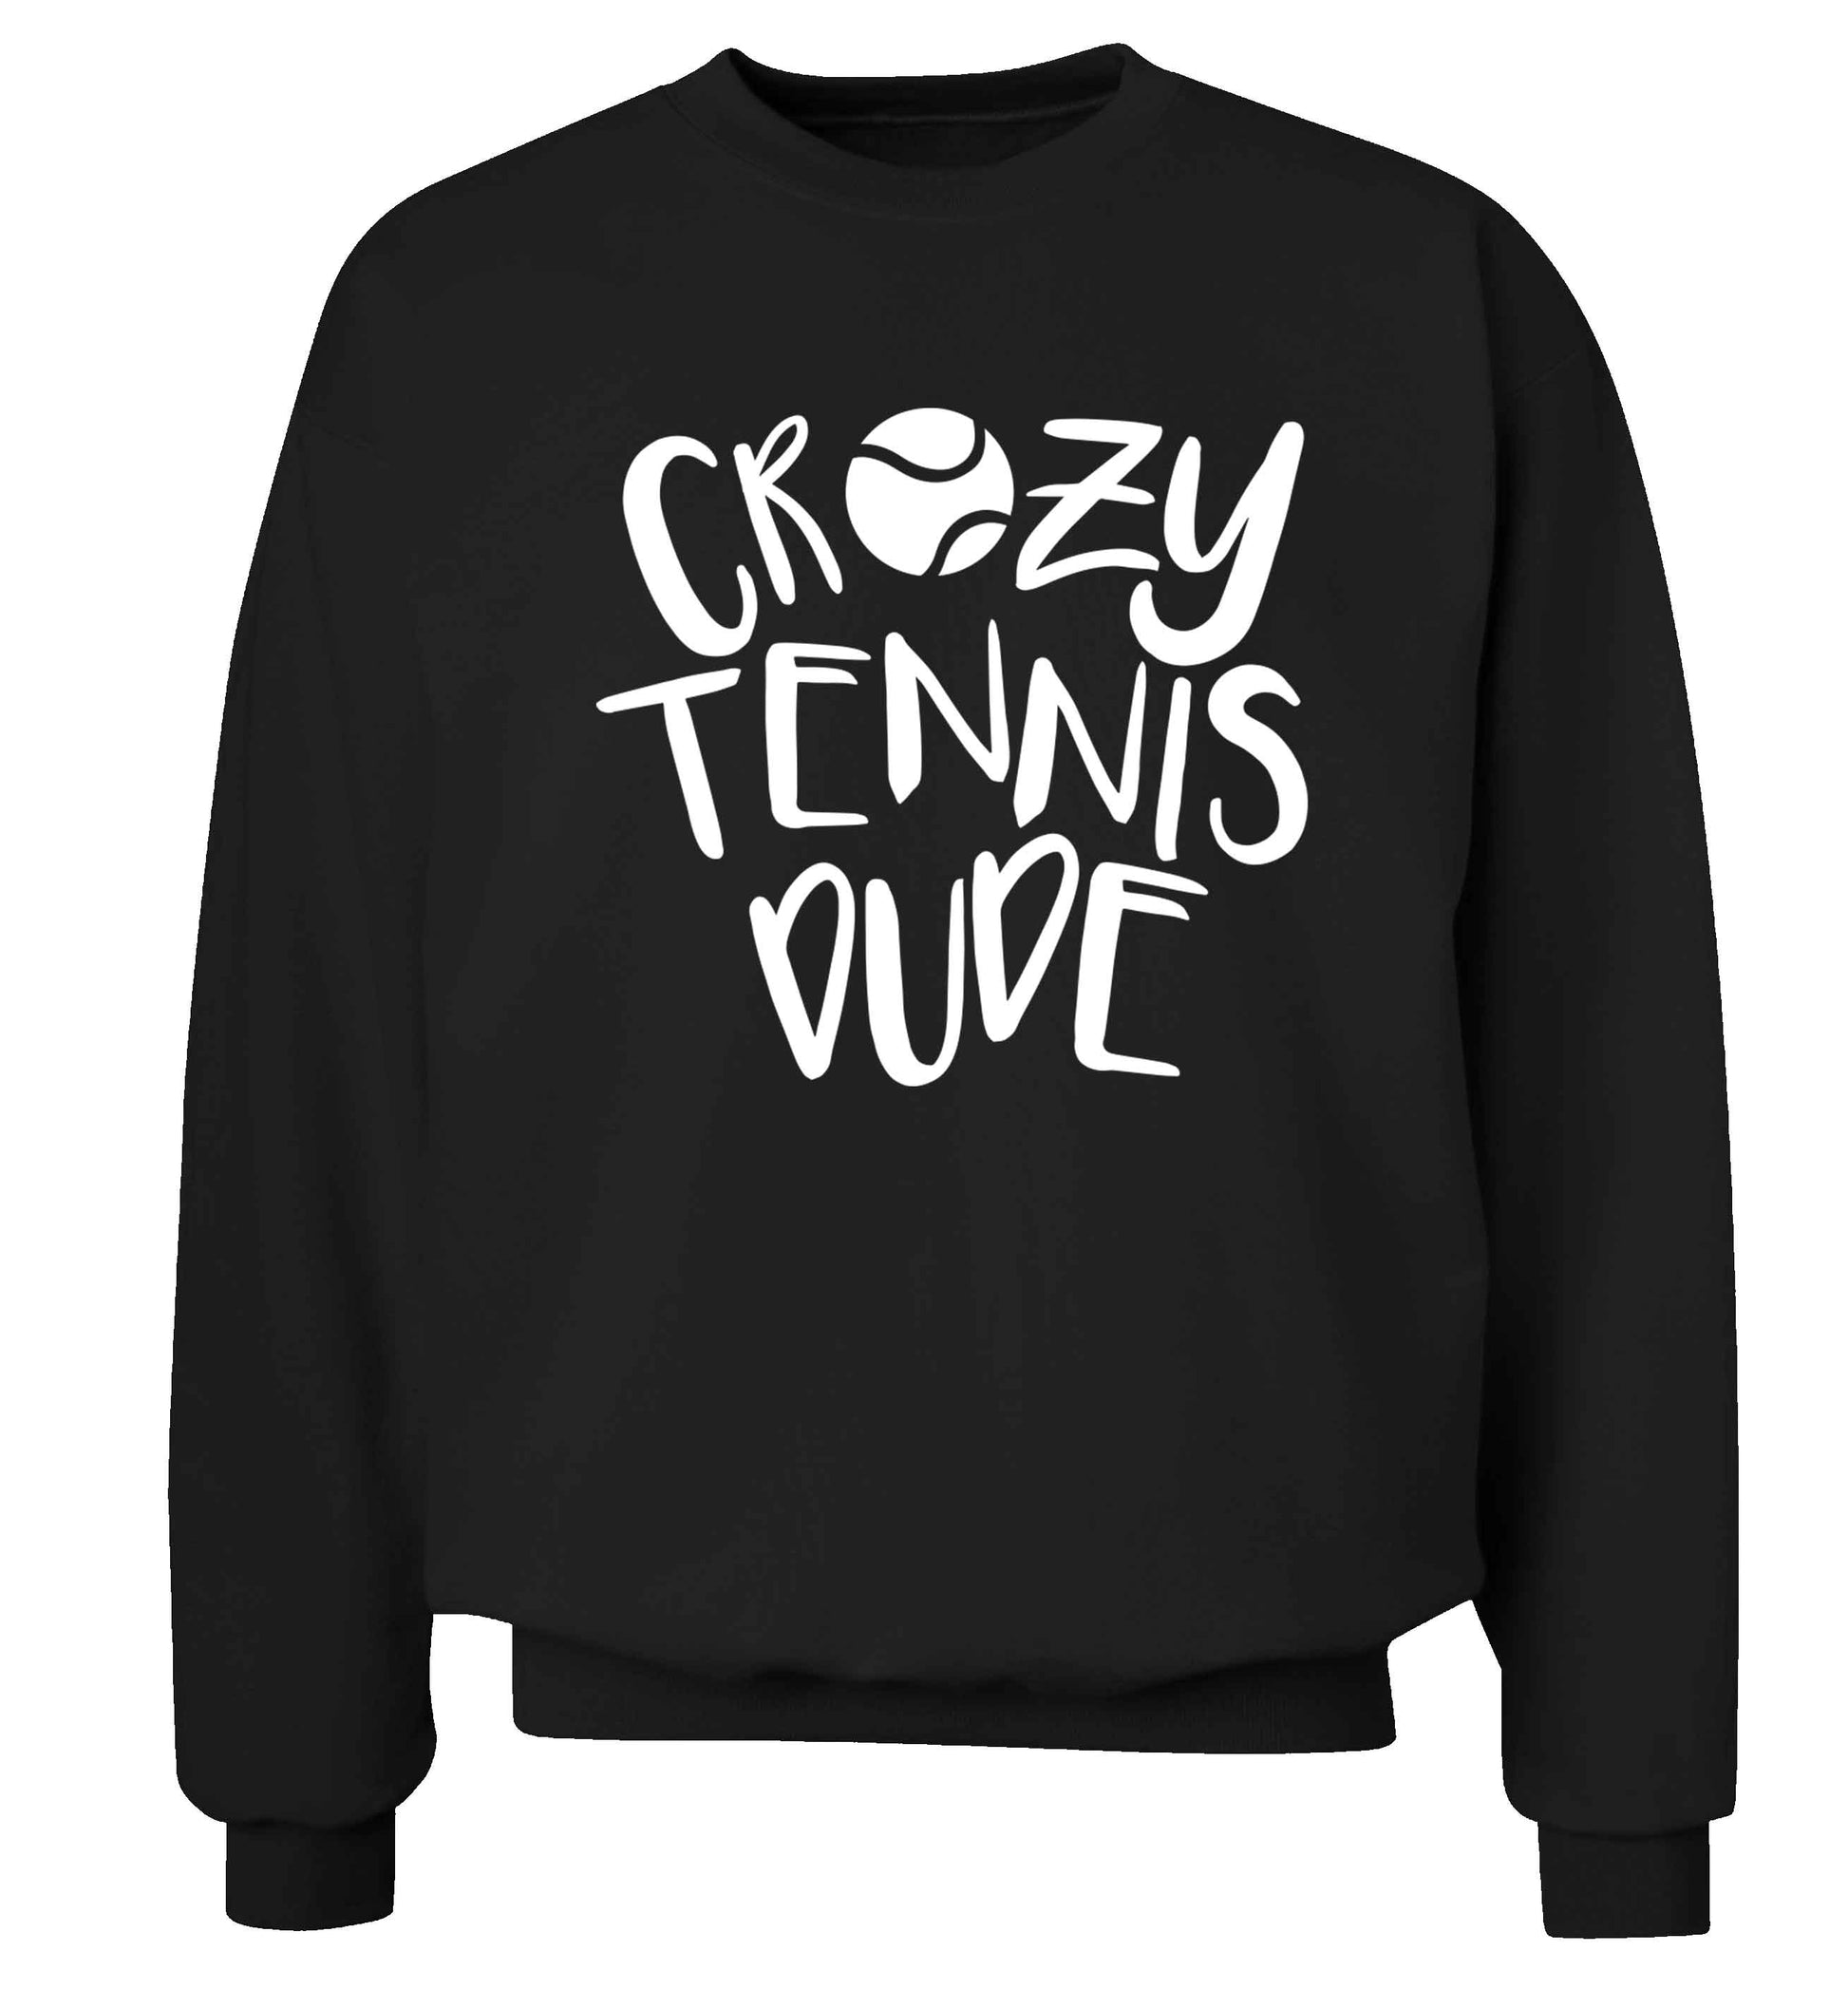 Crazy tennis dude Adult's unisex black Sweater 2XL